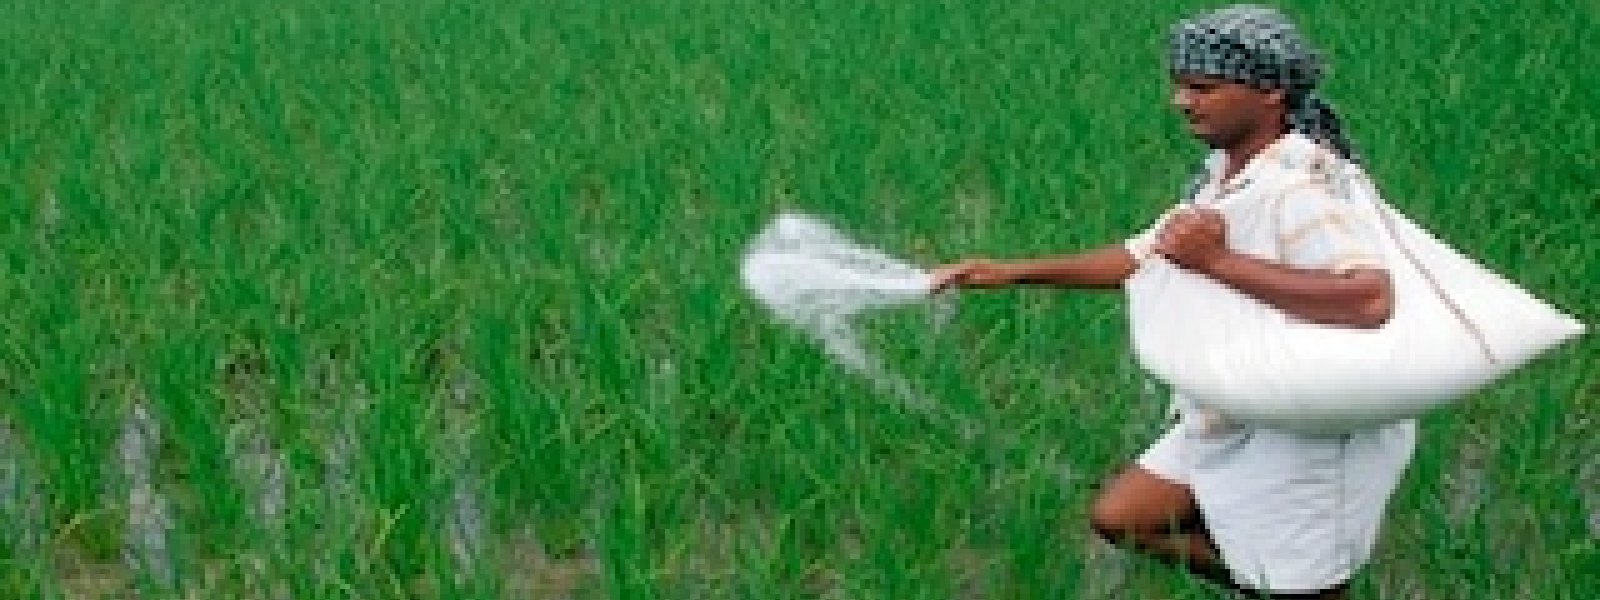 Iran agrees to deliver fertilizer to Sri Lanka